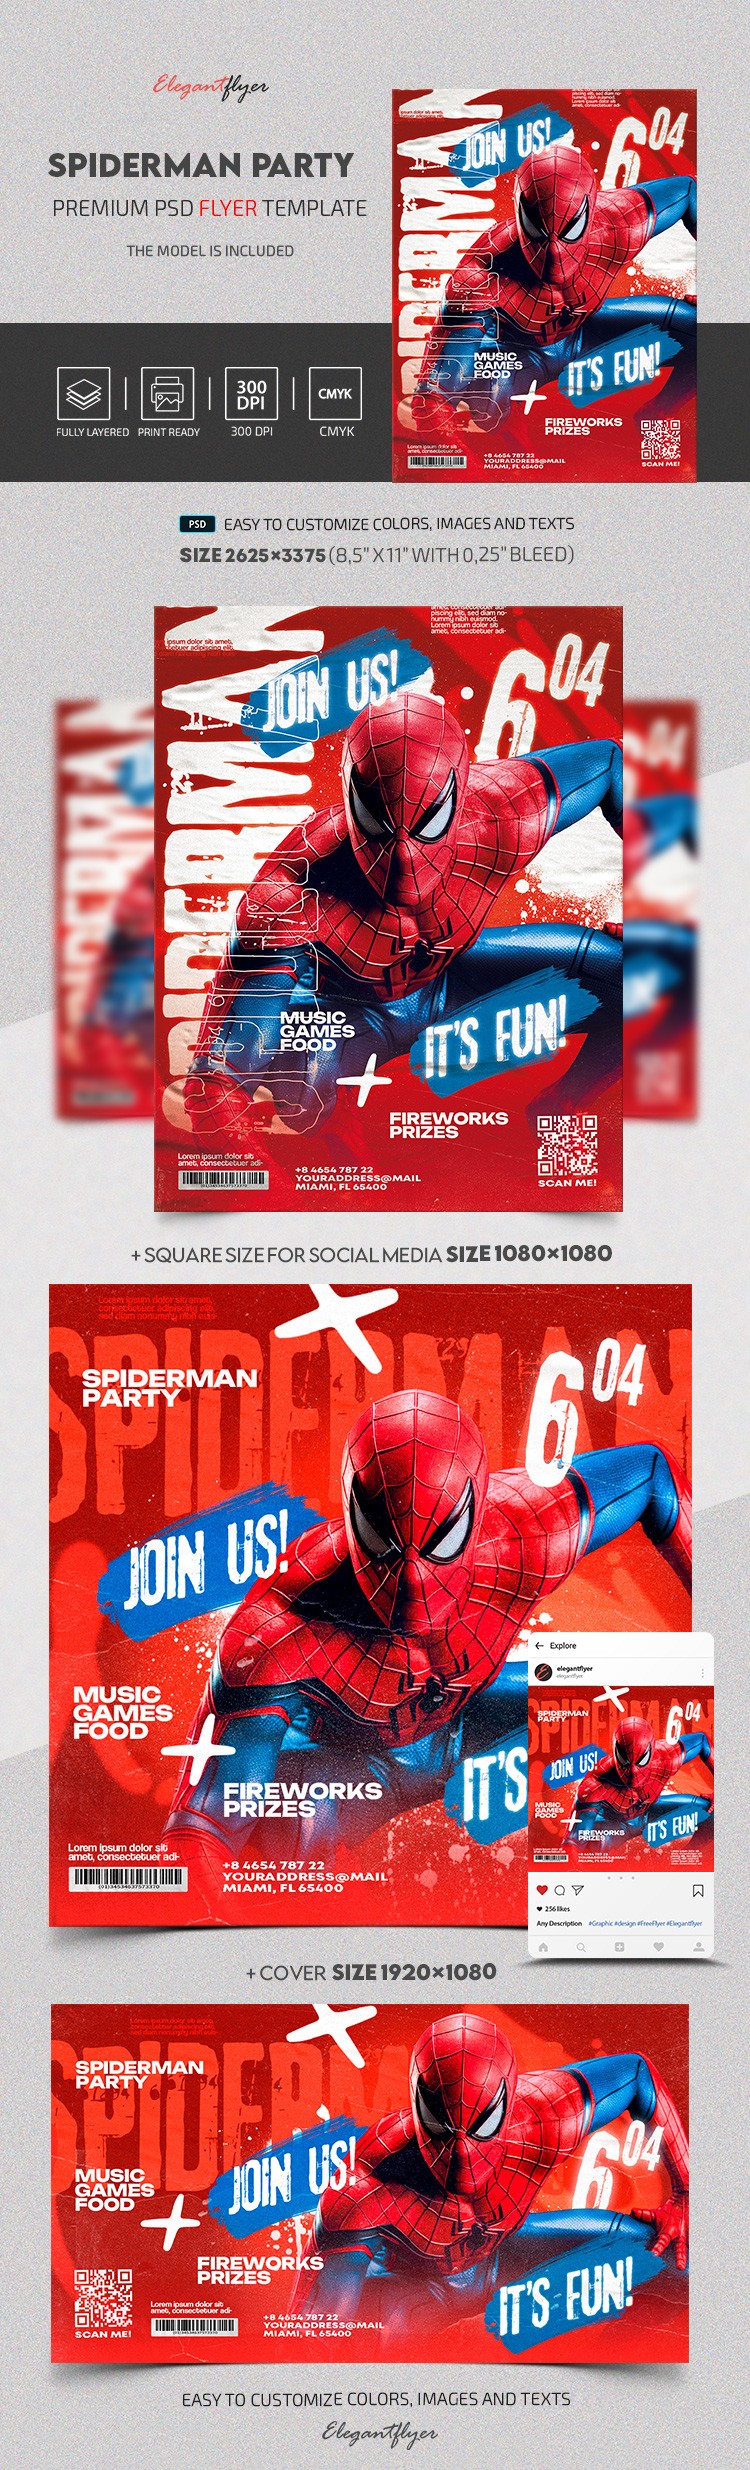 Red Grunge Spiderman Invitation Premium Invitation Template PSD